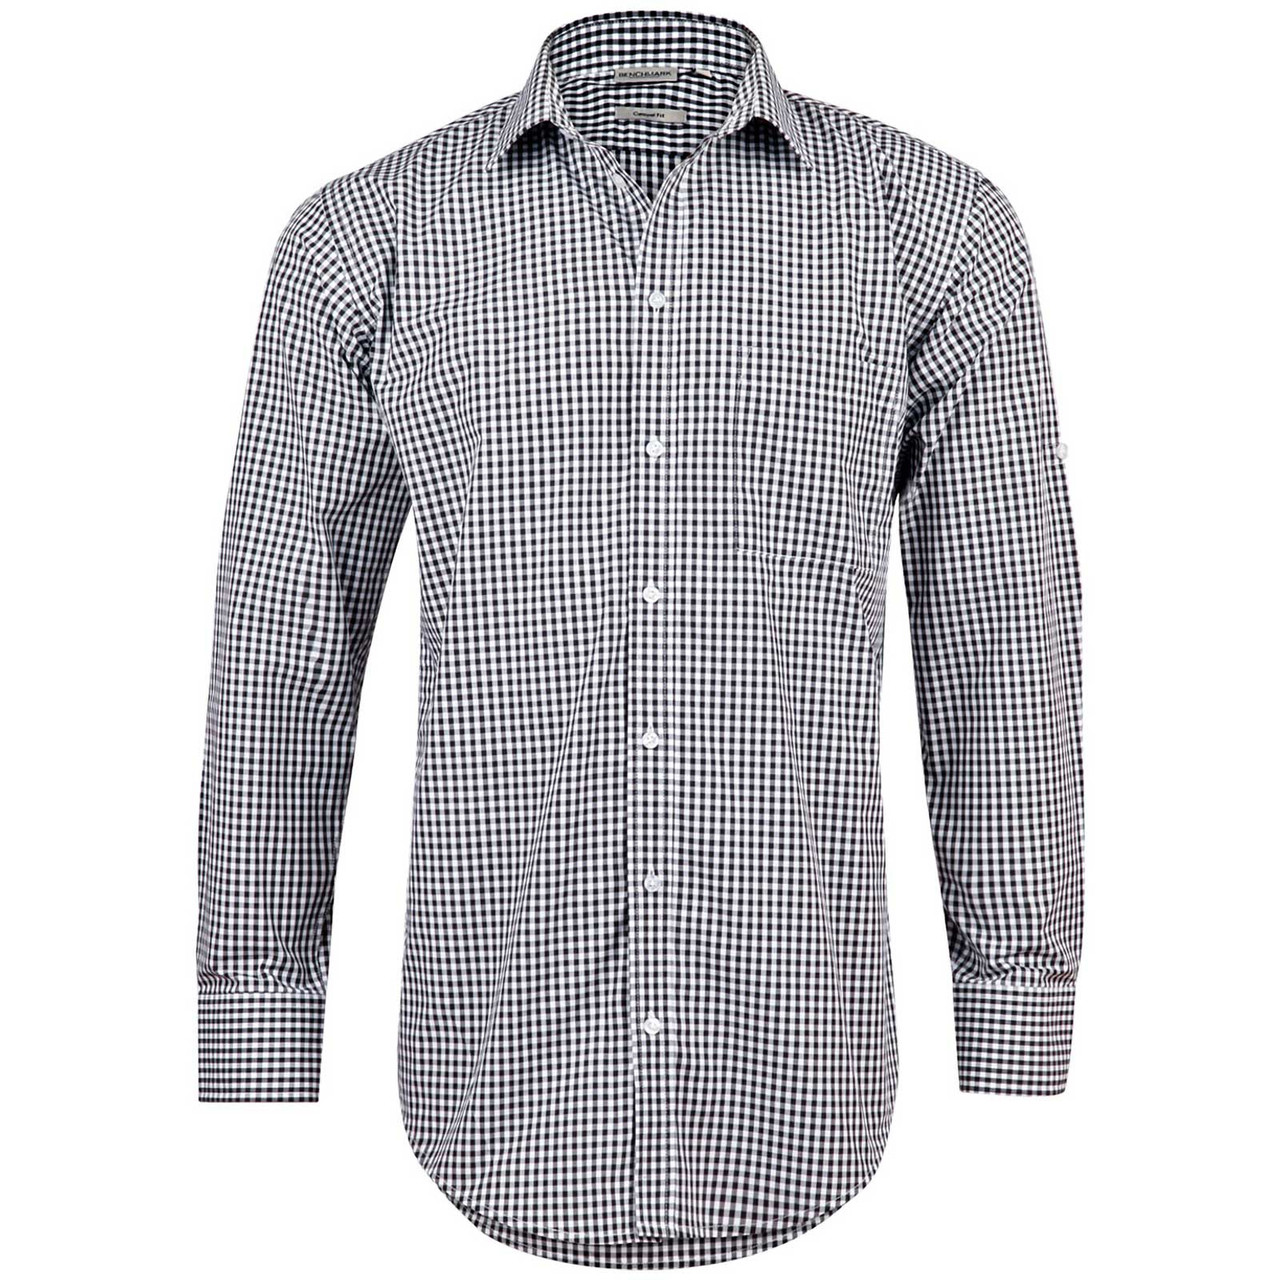 Mens Gingham Checkered Long Sleeve Shirt | Shop Business Shirts Online